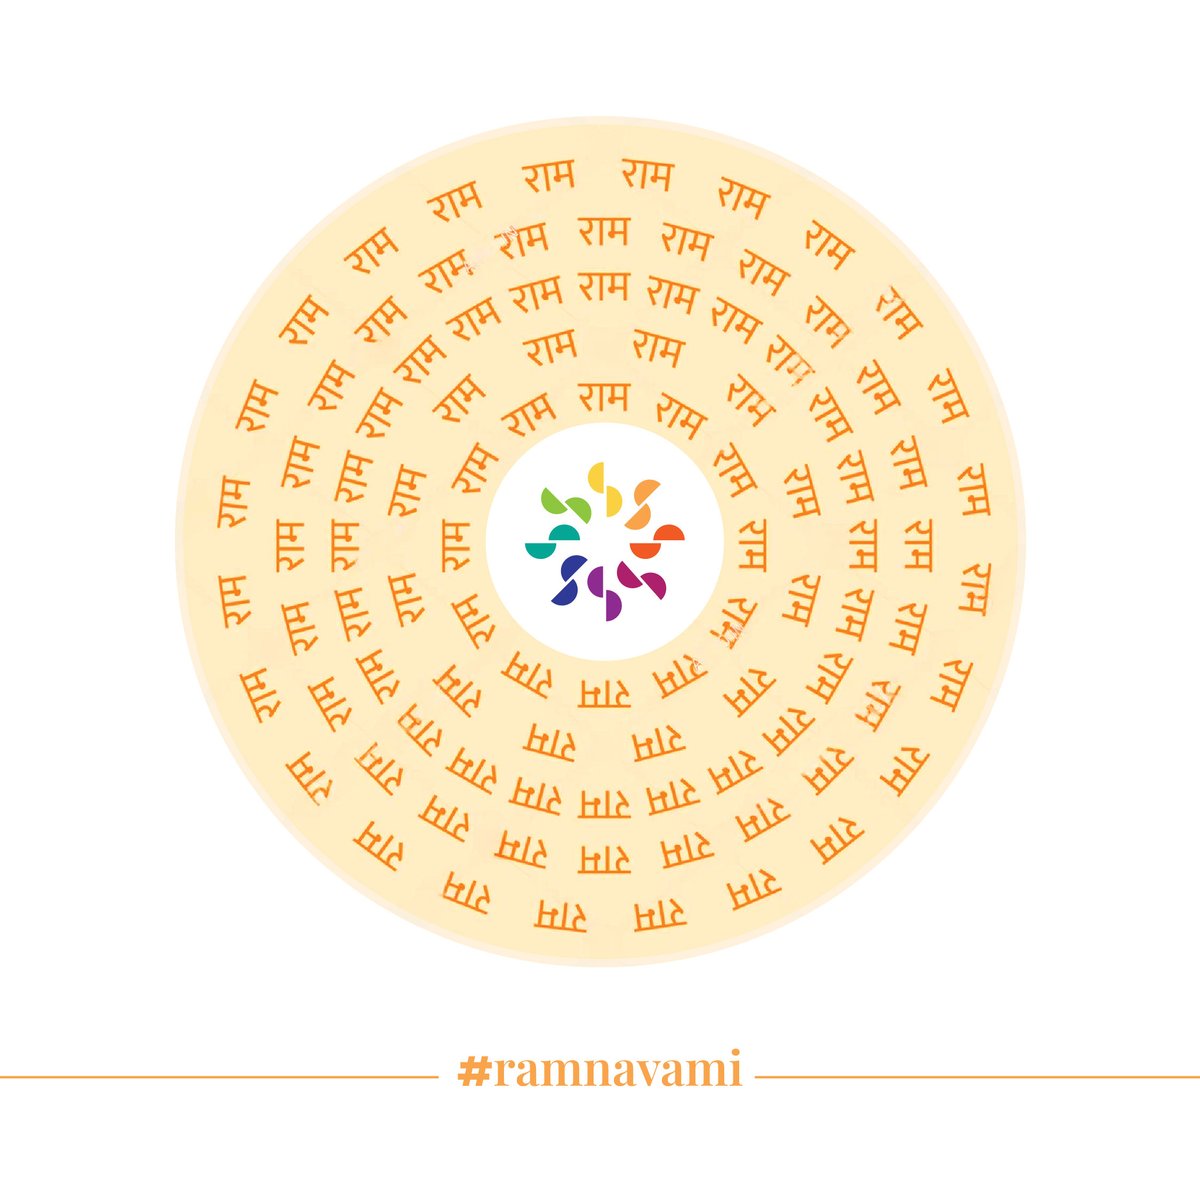 Let's celebrate the auspicious occasion of Ram Navami with love, peace, and harmony! 🌺
#RamNavami #JaiShriRam #RamNavami2024 #LordRama #TrendingNow #Viral #ExplorePage #TwitterFamous #GoingViral #Popular #MustSee #TopTweets #Twitterverse #TrendingTopics #Discover #ViralTweet